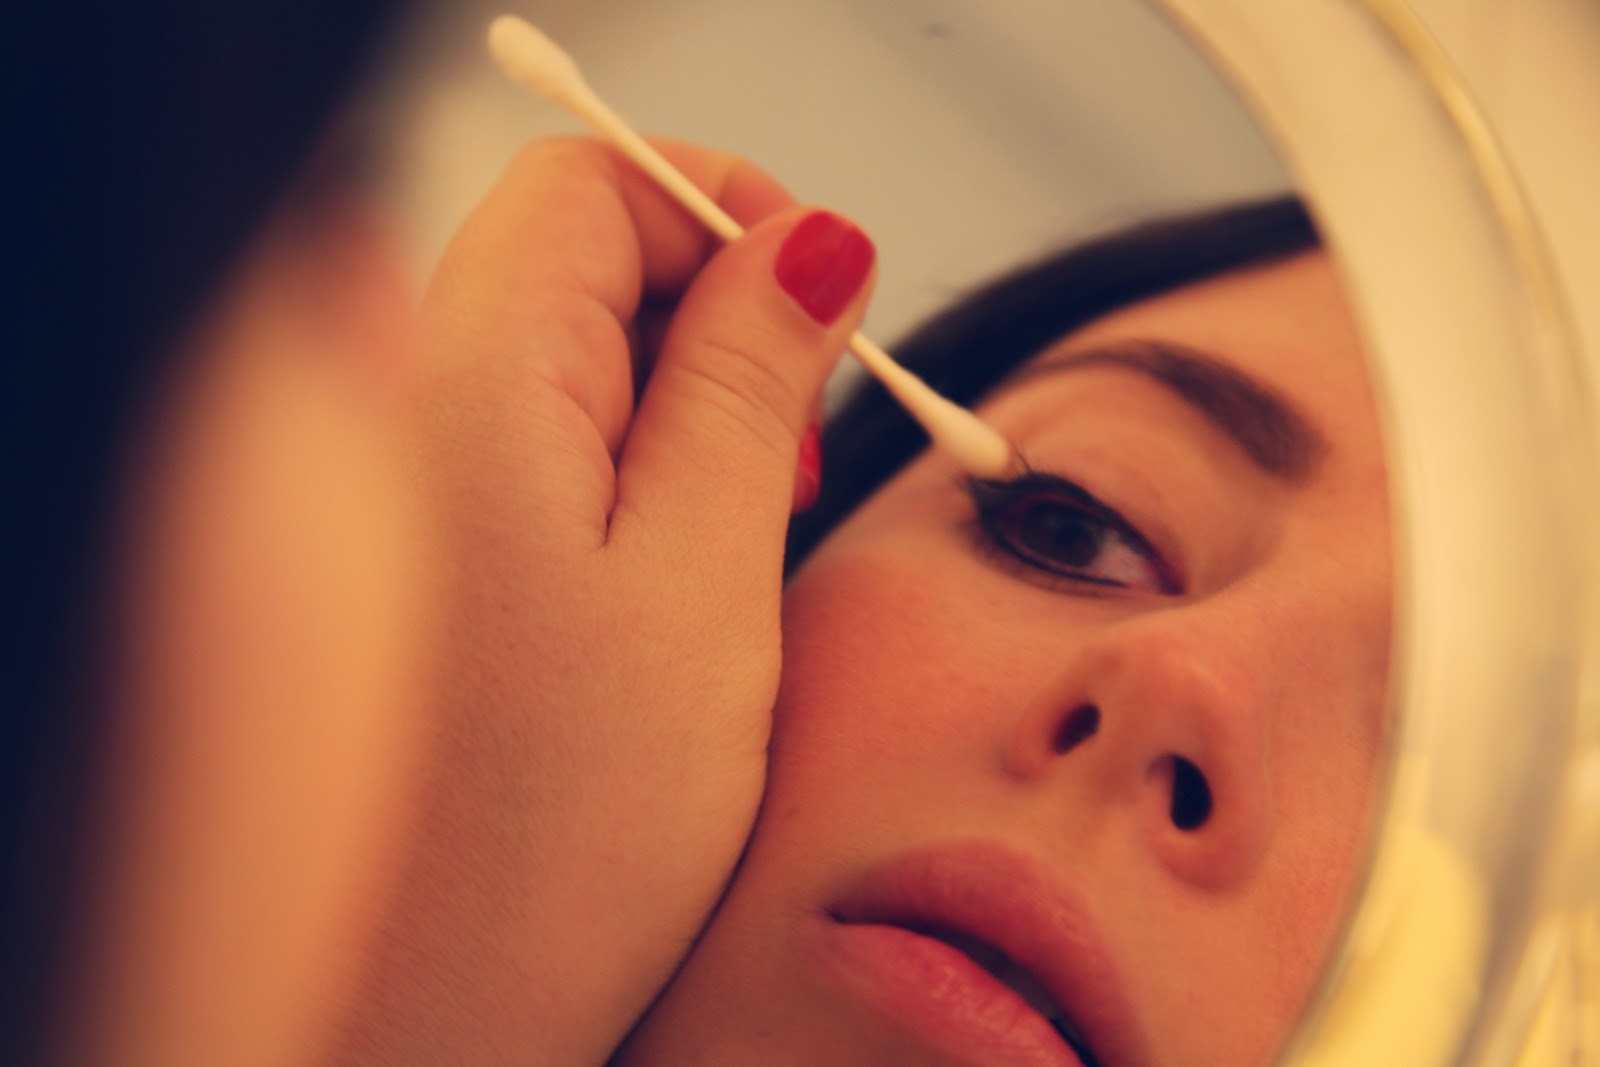 q-tip-to-remove-makeup